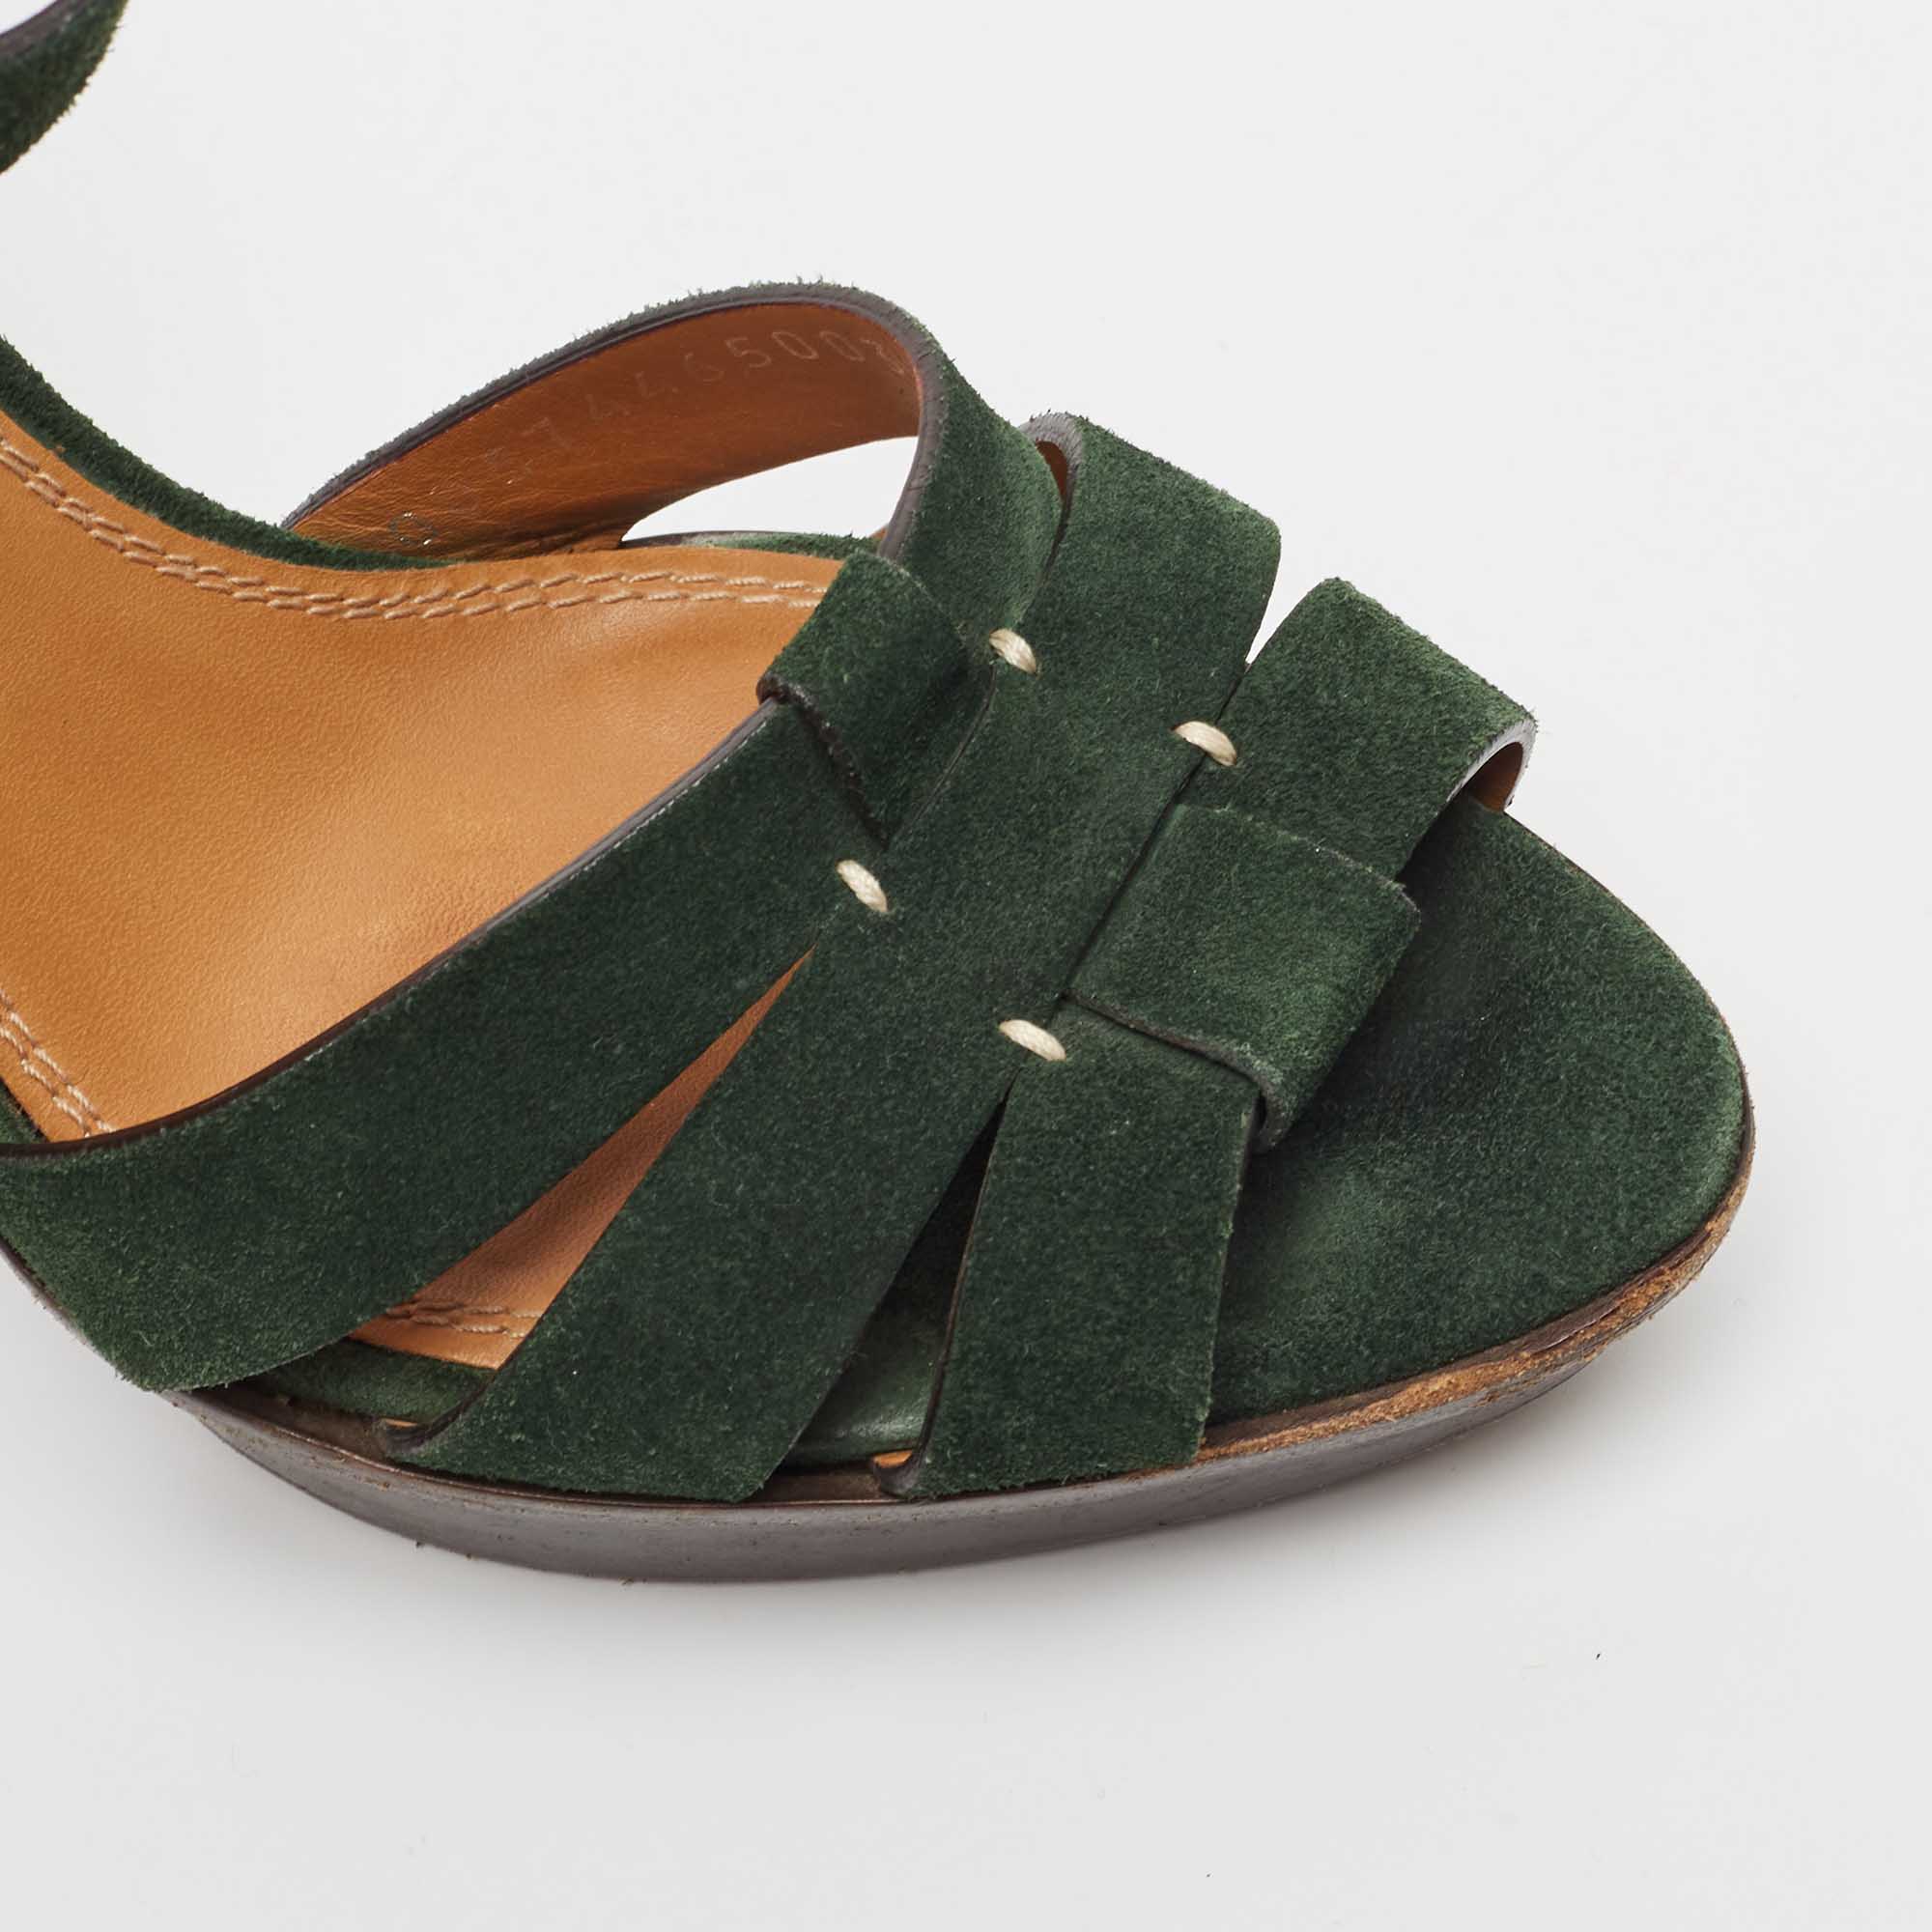 Ralph Lauren Green Suede Ankle Strap Sandals Size 37.5